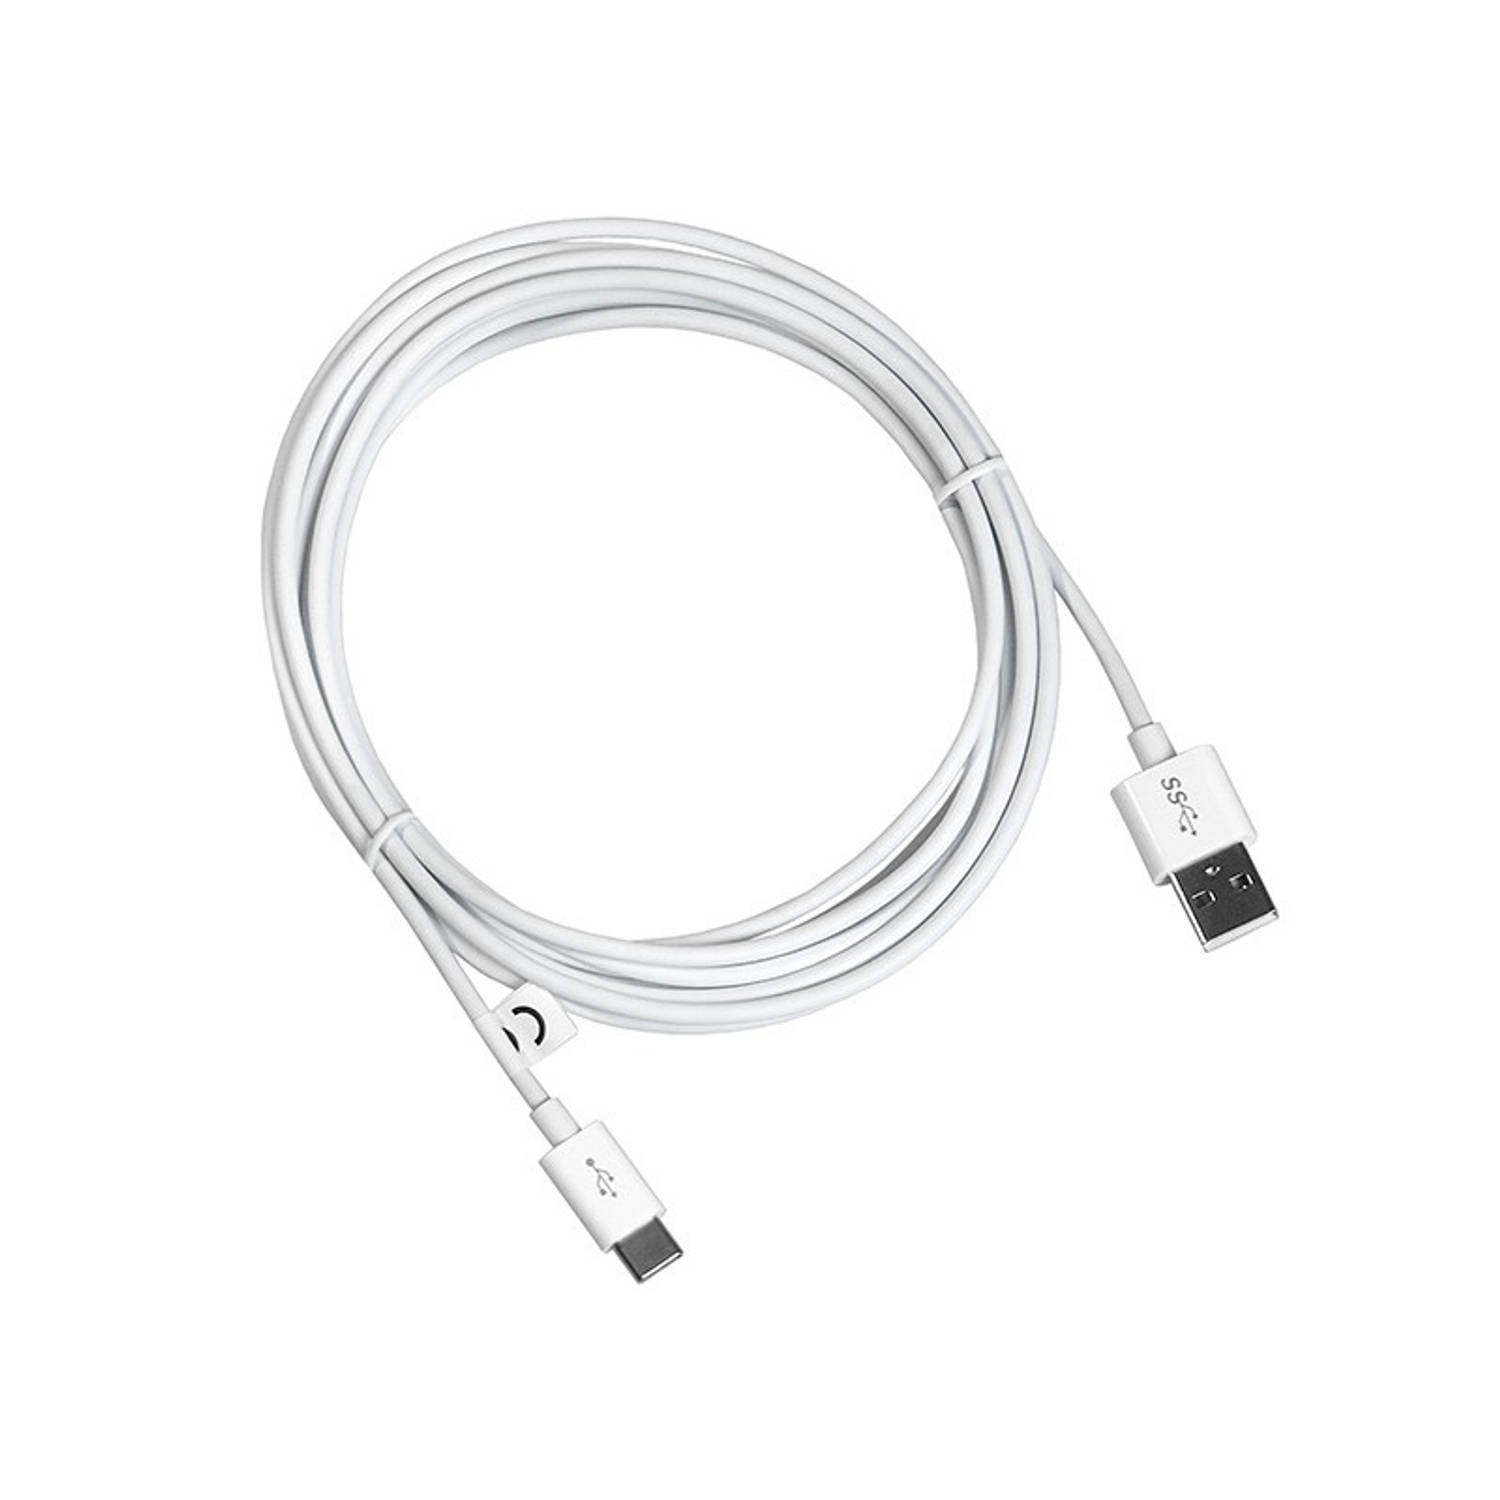 Tracer USB 2.0 kabel - Type C - 1.5 meter - Wit